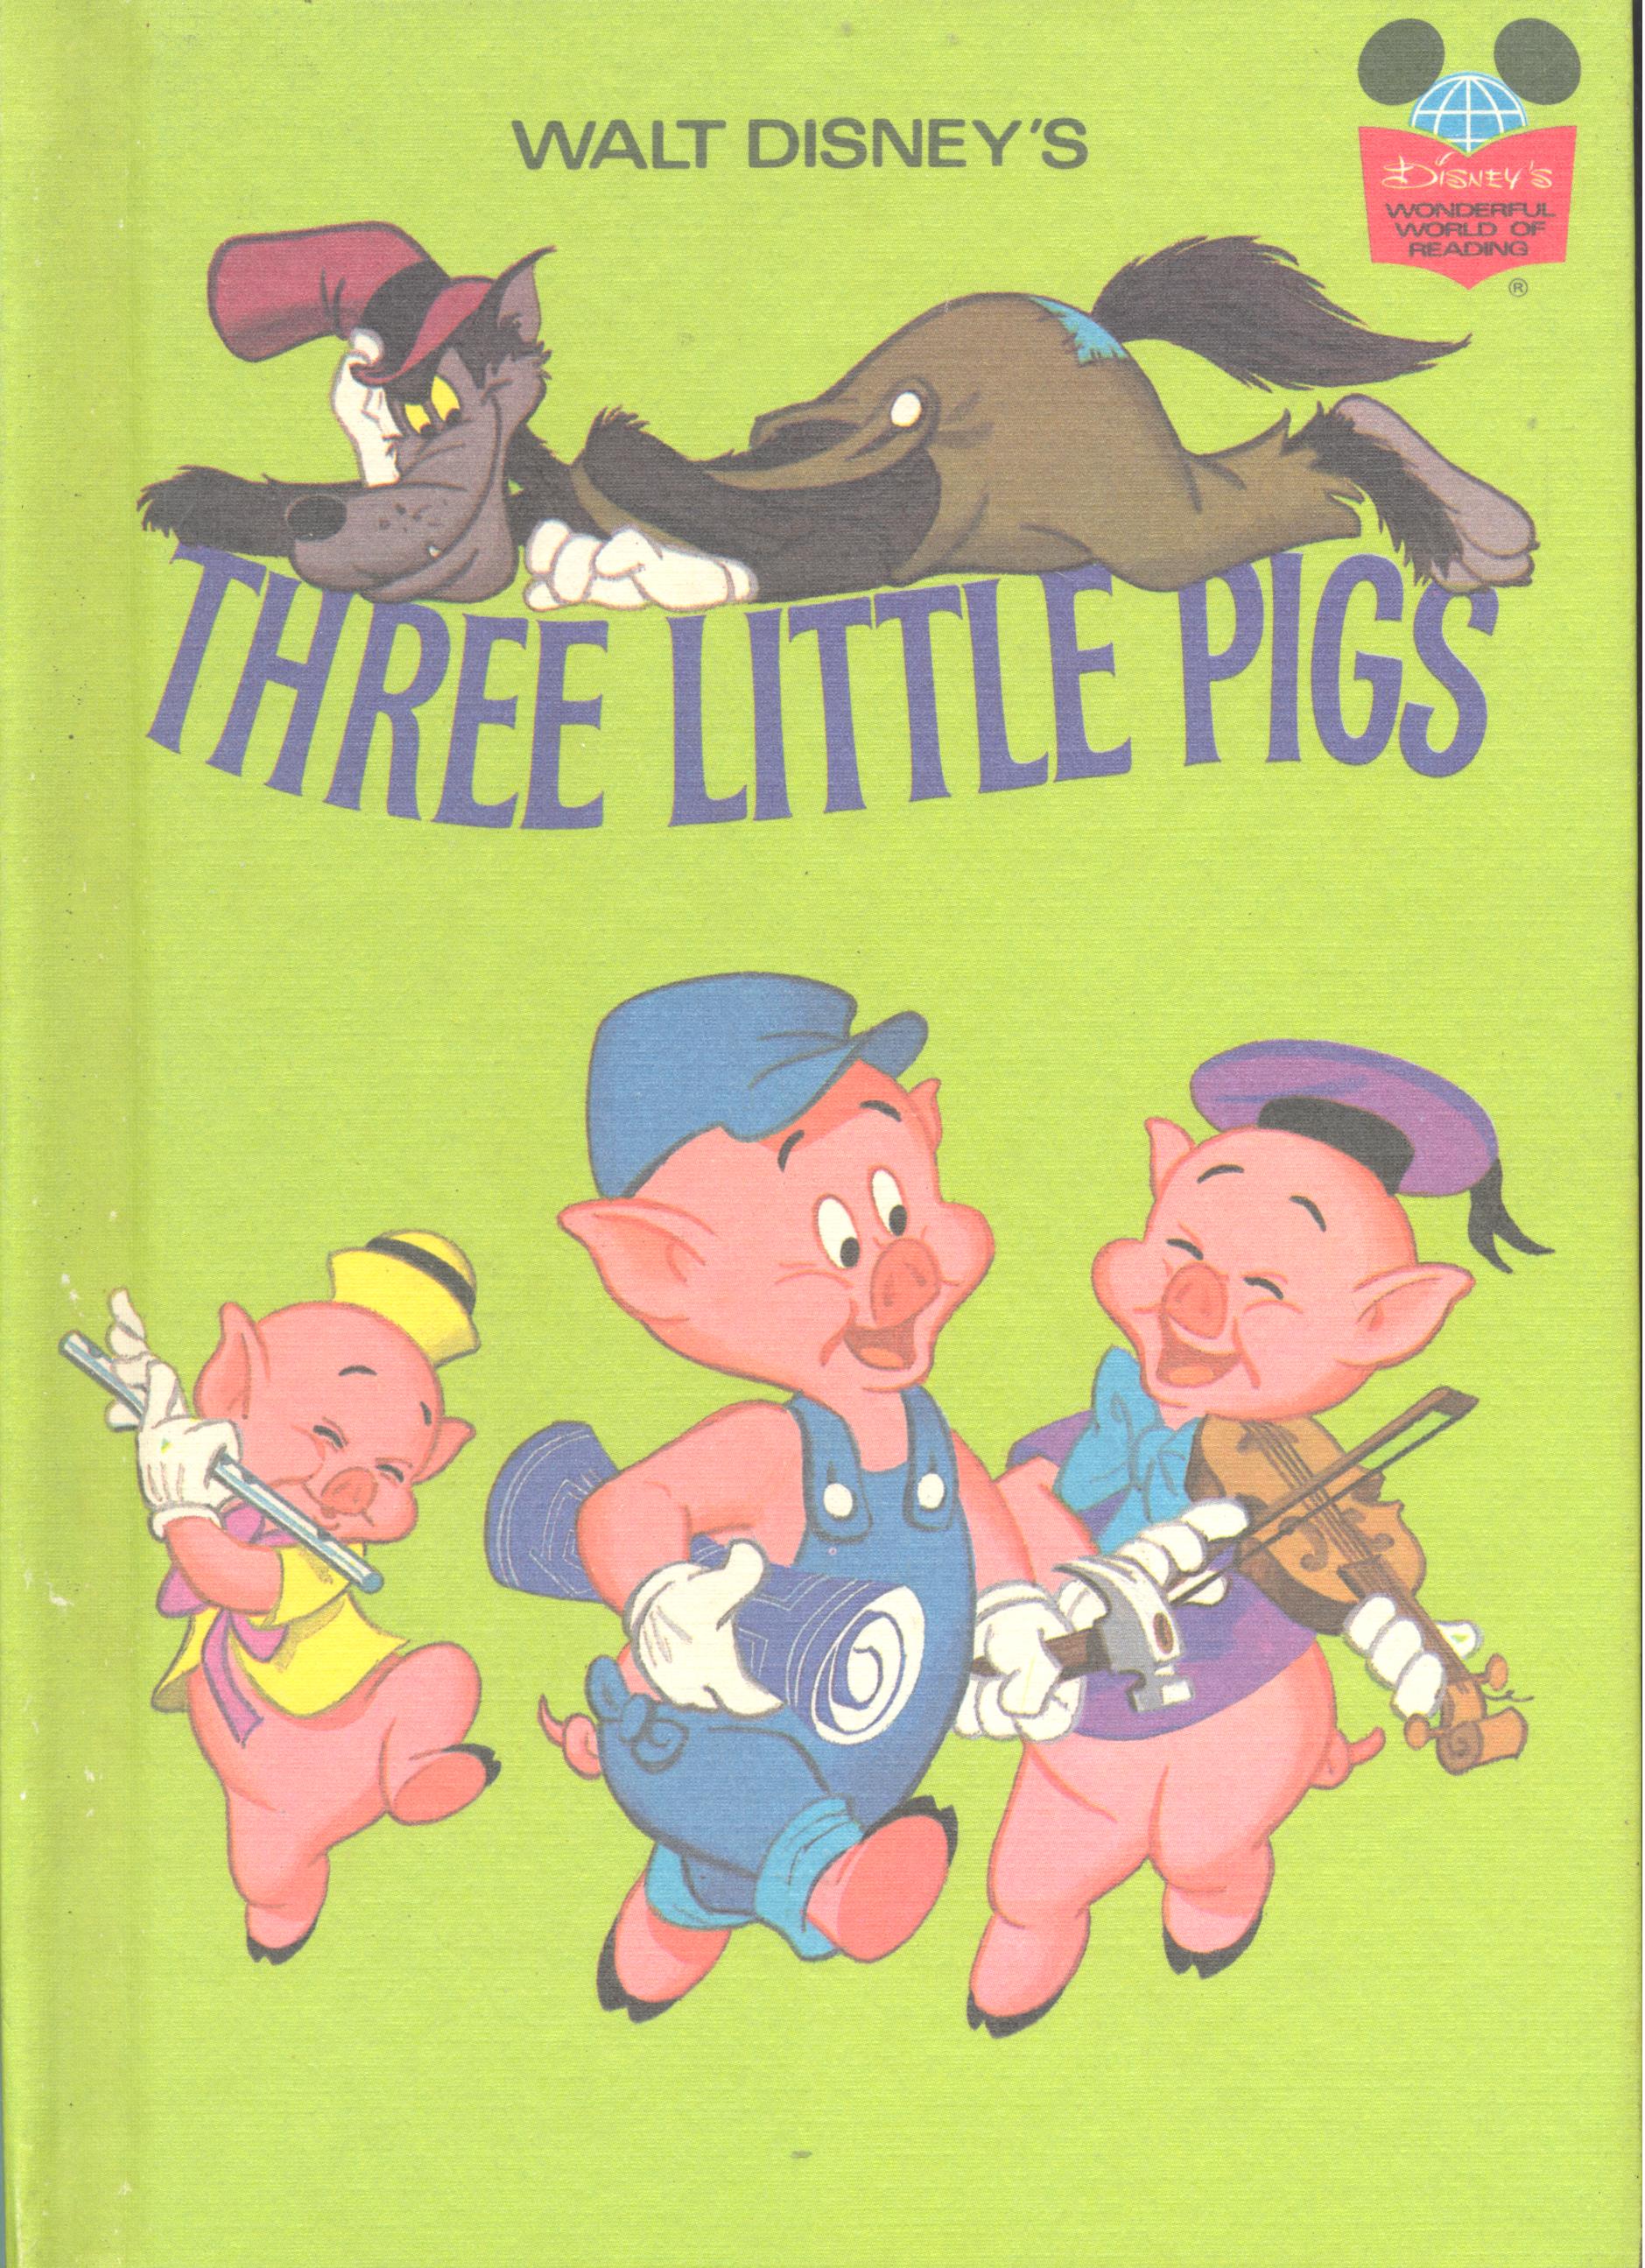 Walt Disney' s Three little pigs.